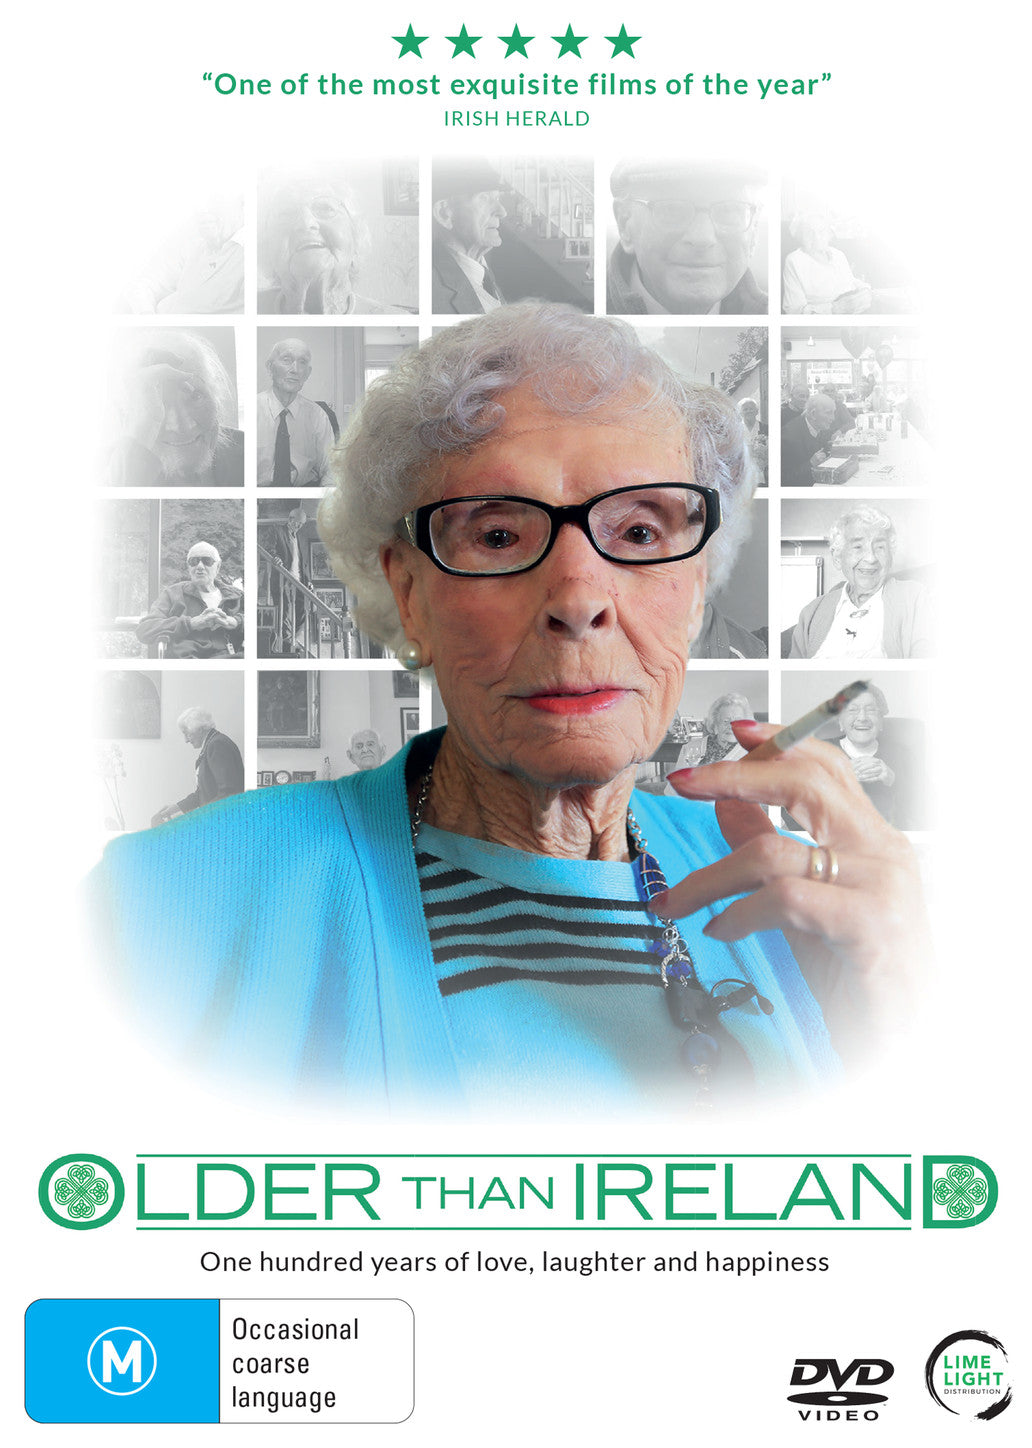 OLDER THAN IRELAND